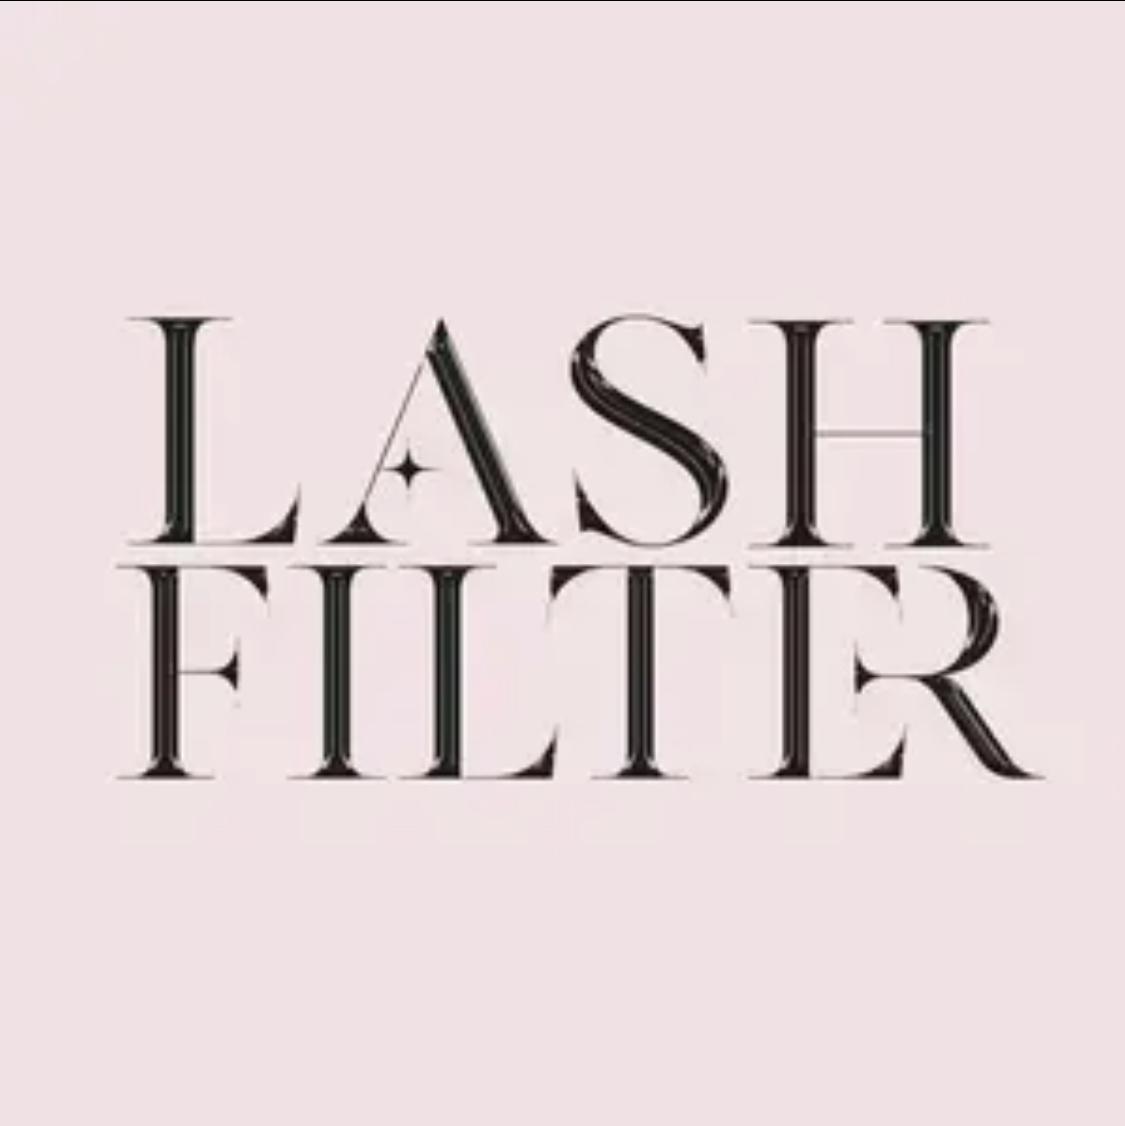 Lash Filter's images